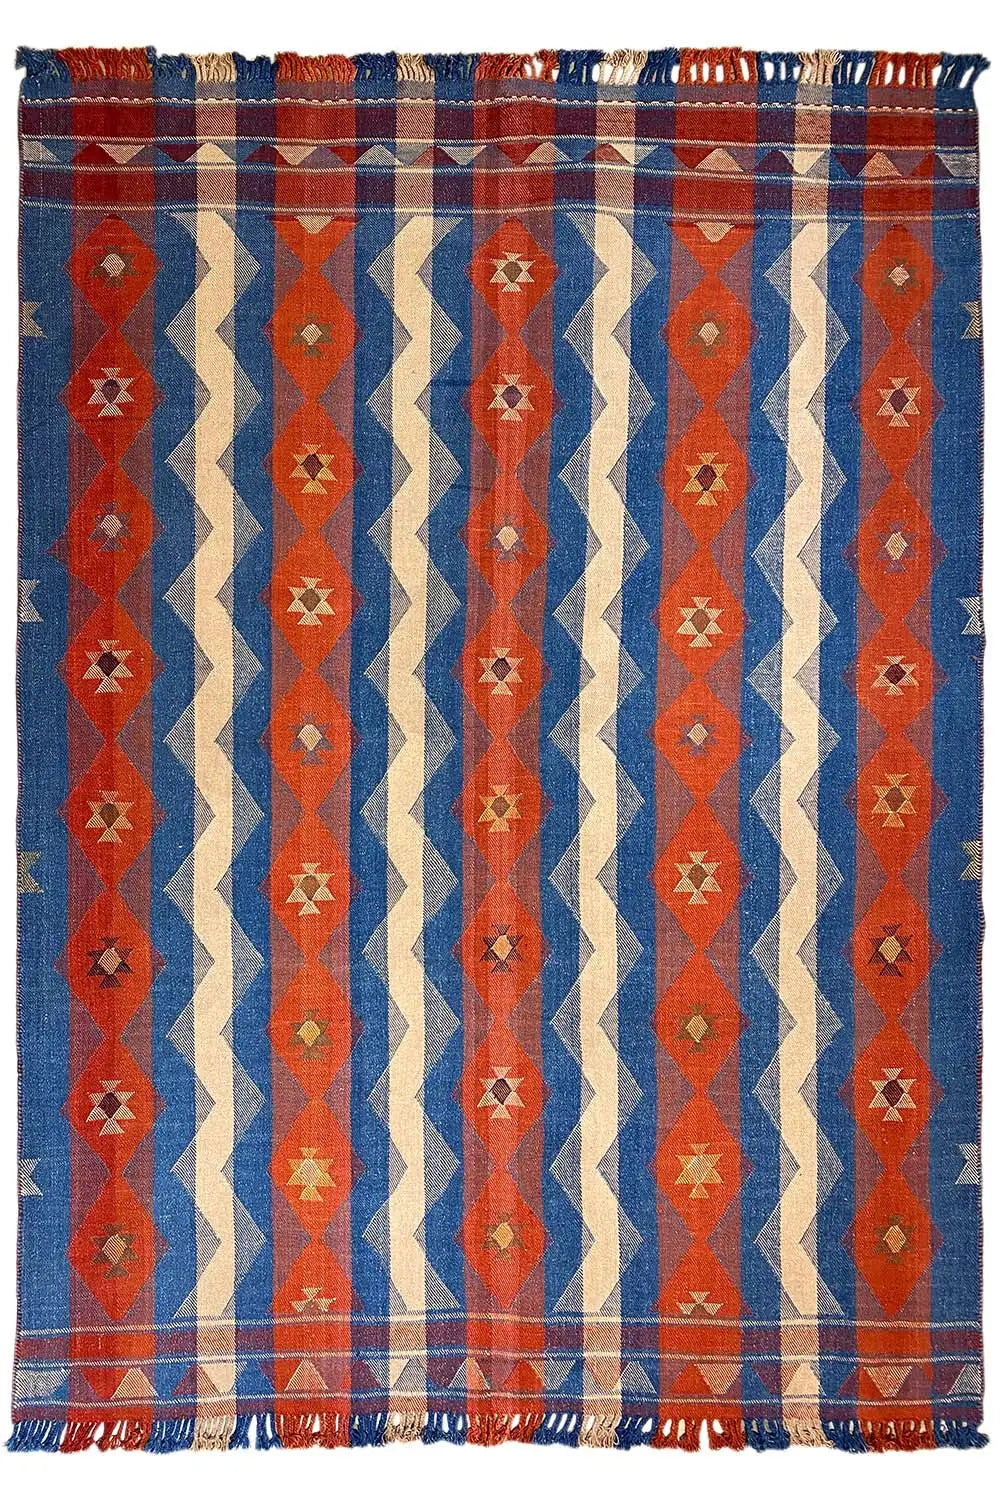 Jajim Exclusive (191x254cm) - German Carpet Shop